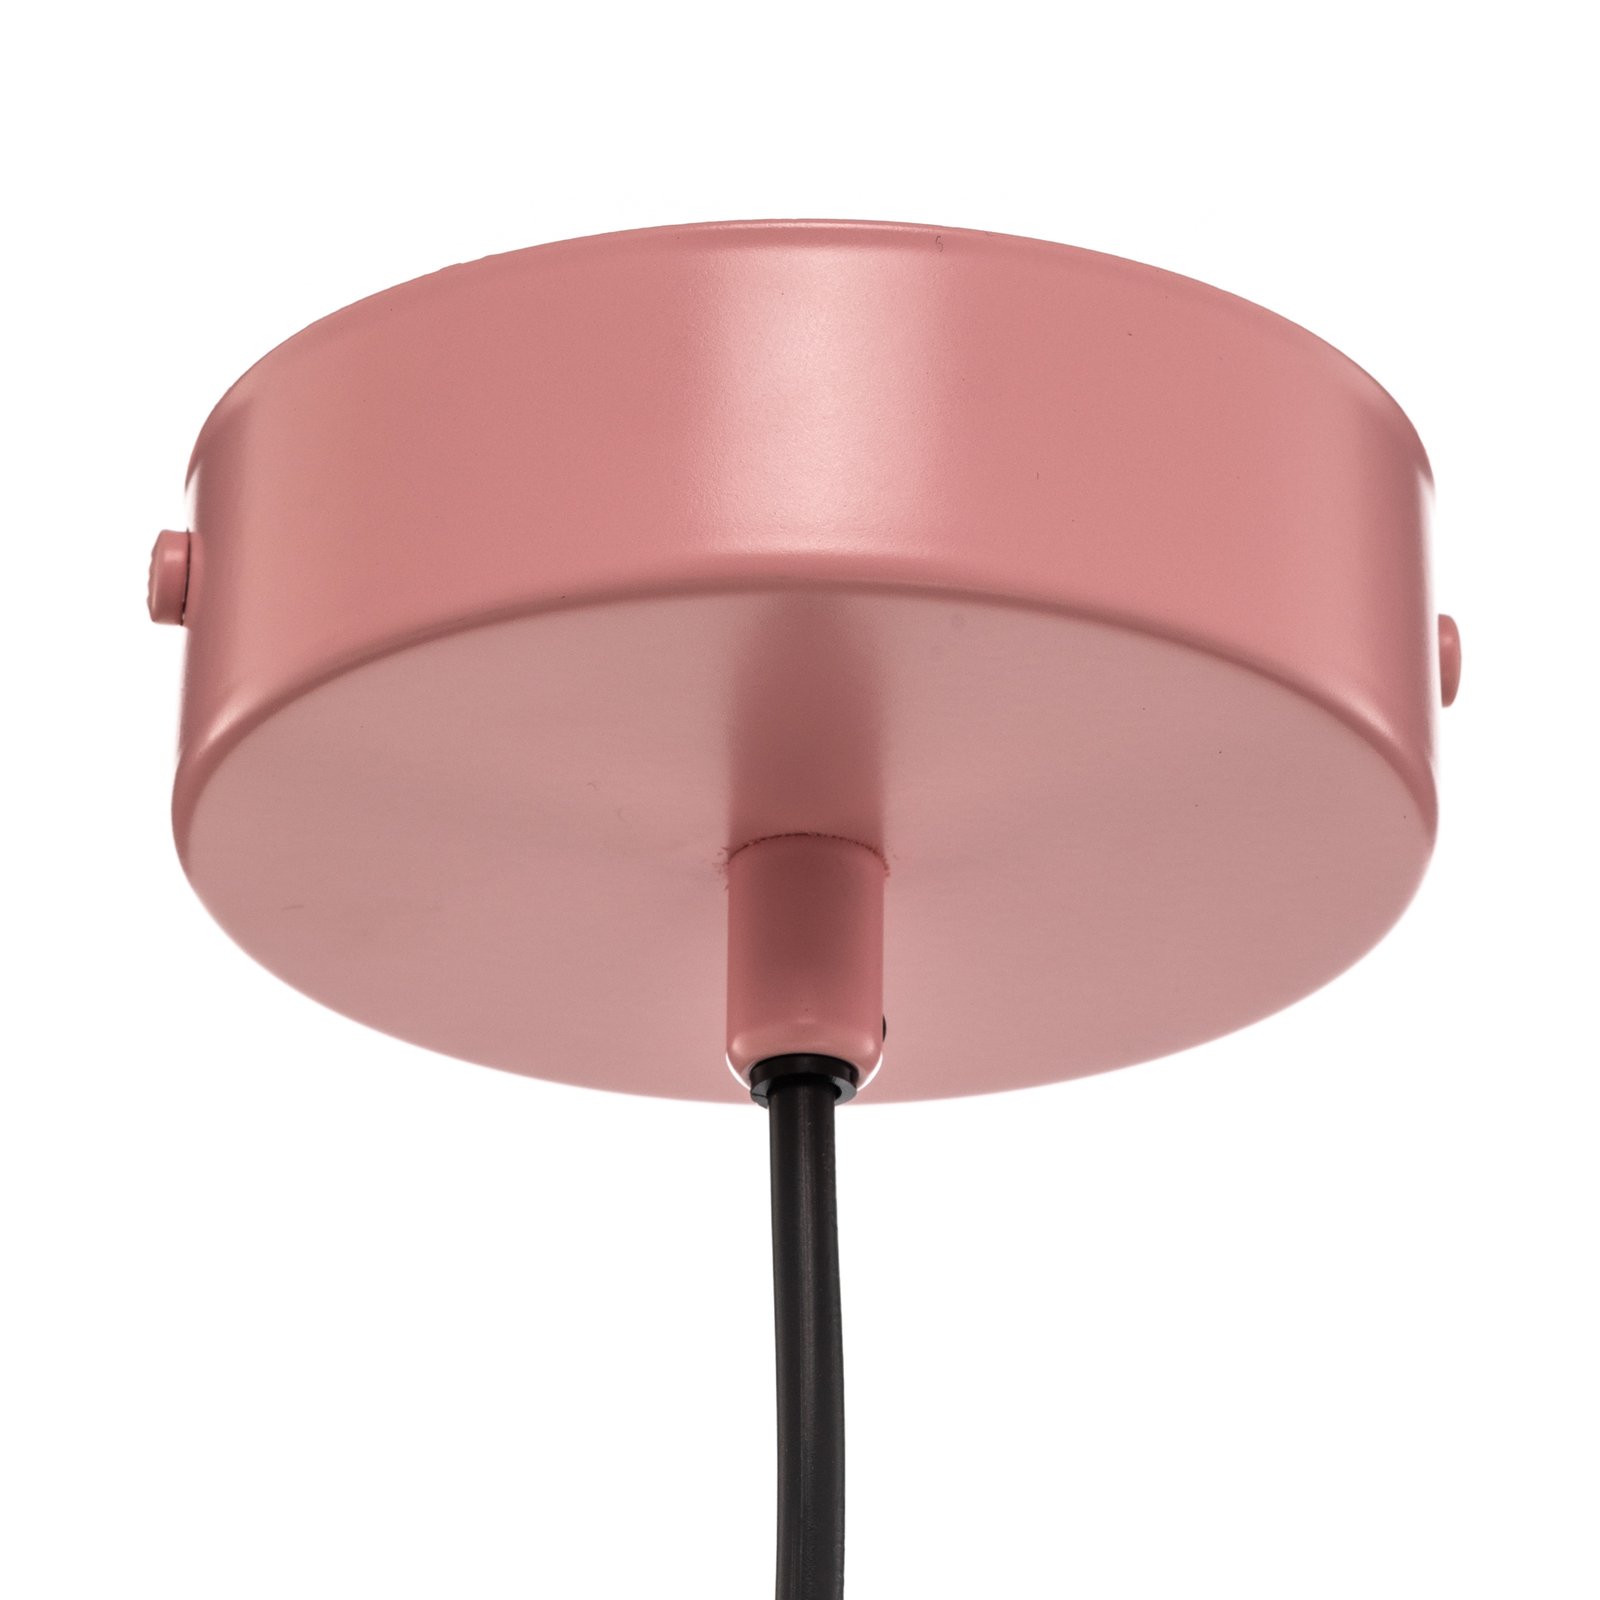 Samba pendant light, 1-bulb, pink/white